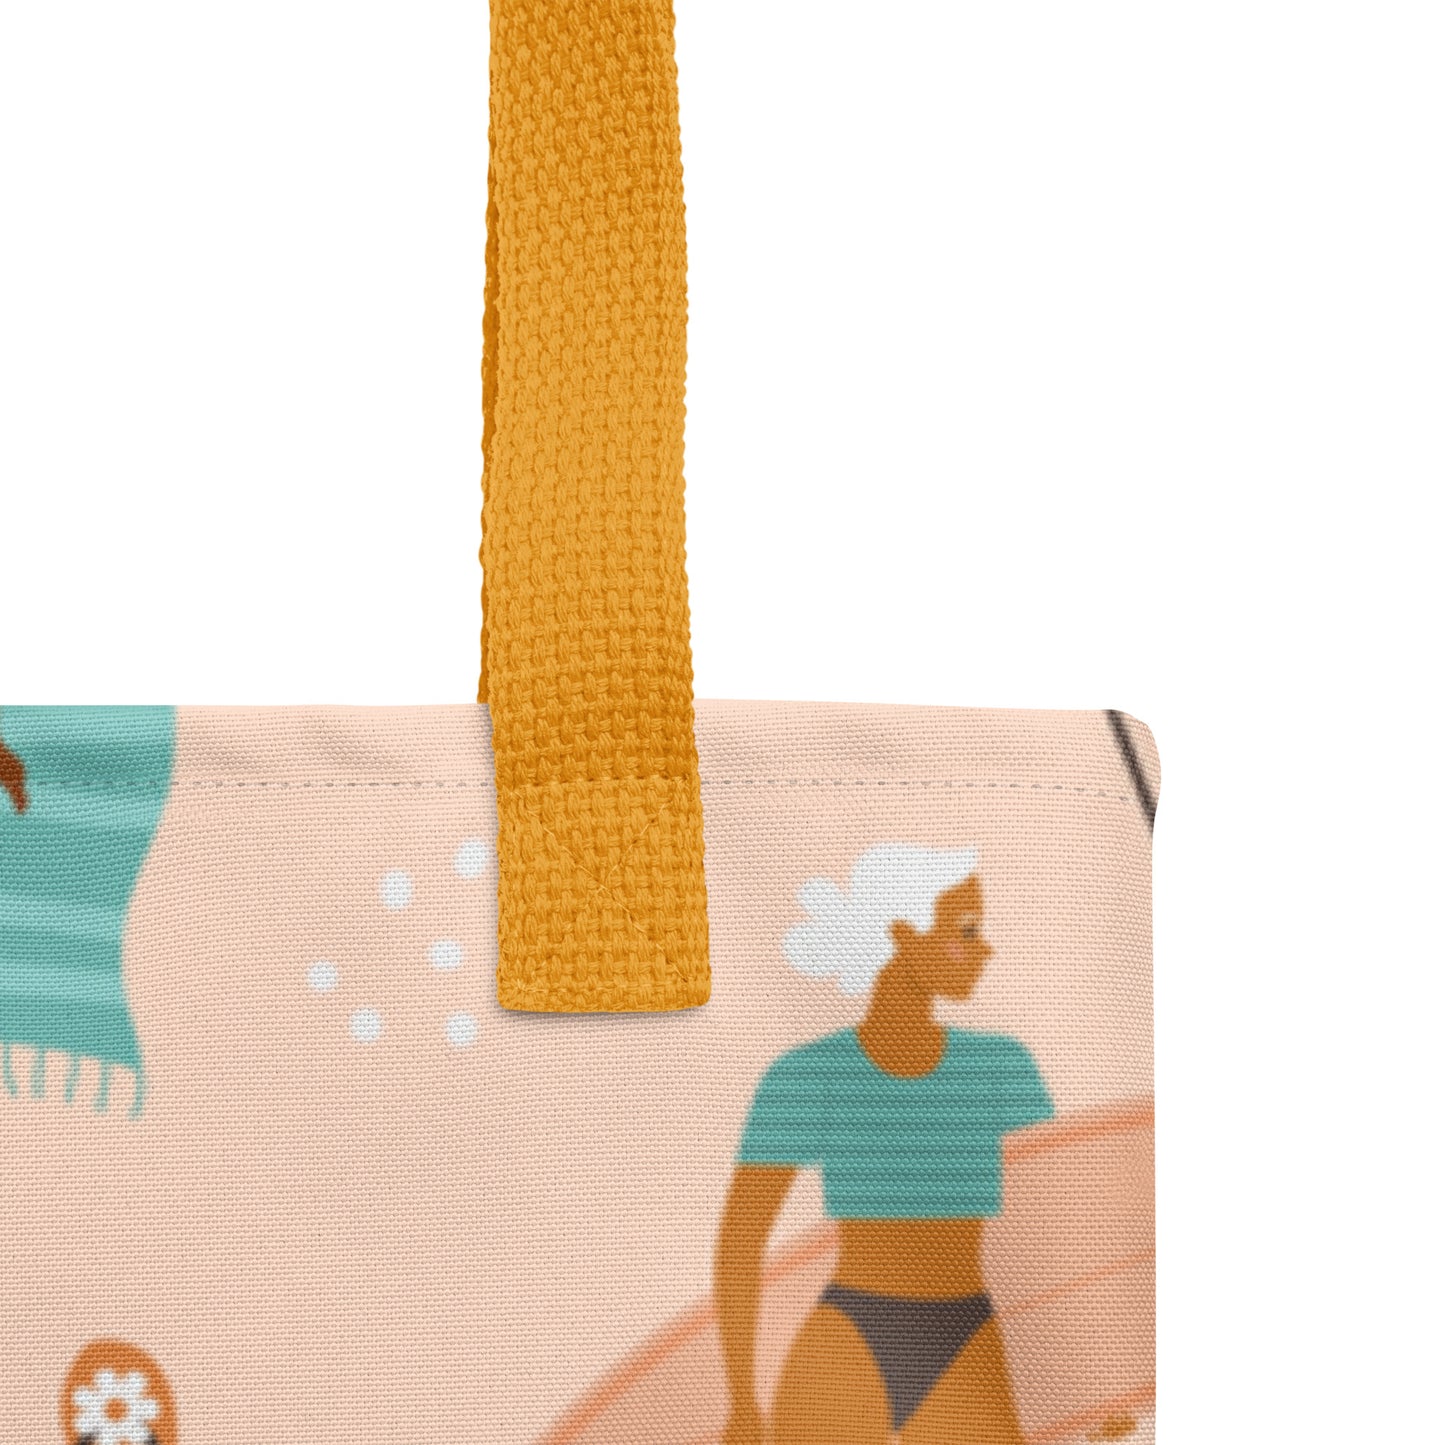 Tote Bag Women Designer (Beach Fun Time Pattern 001)